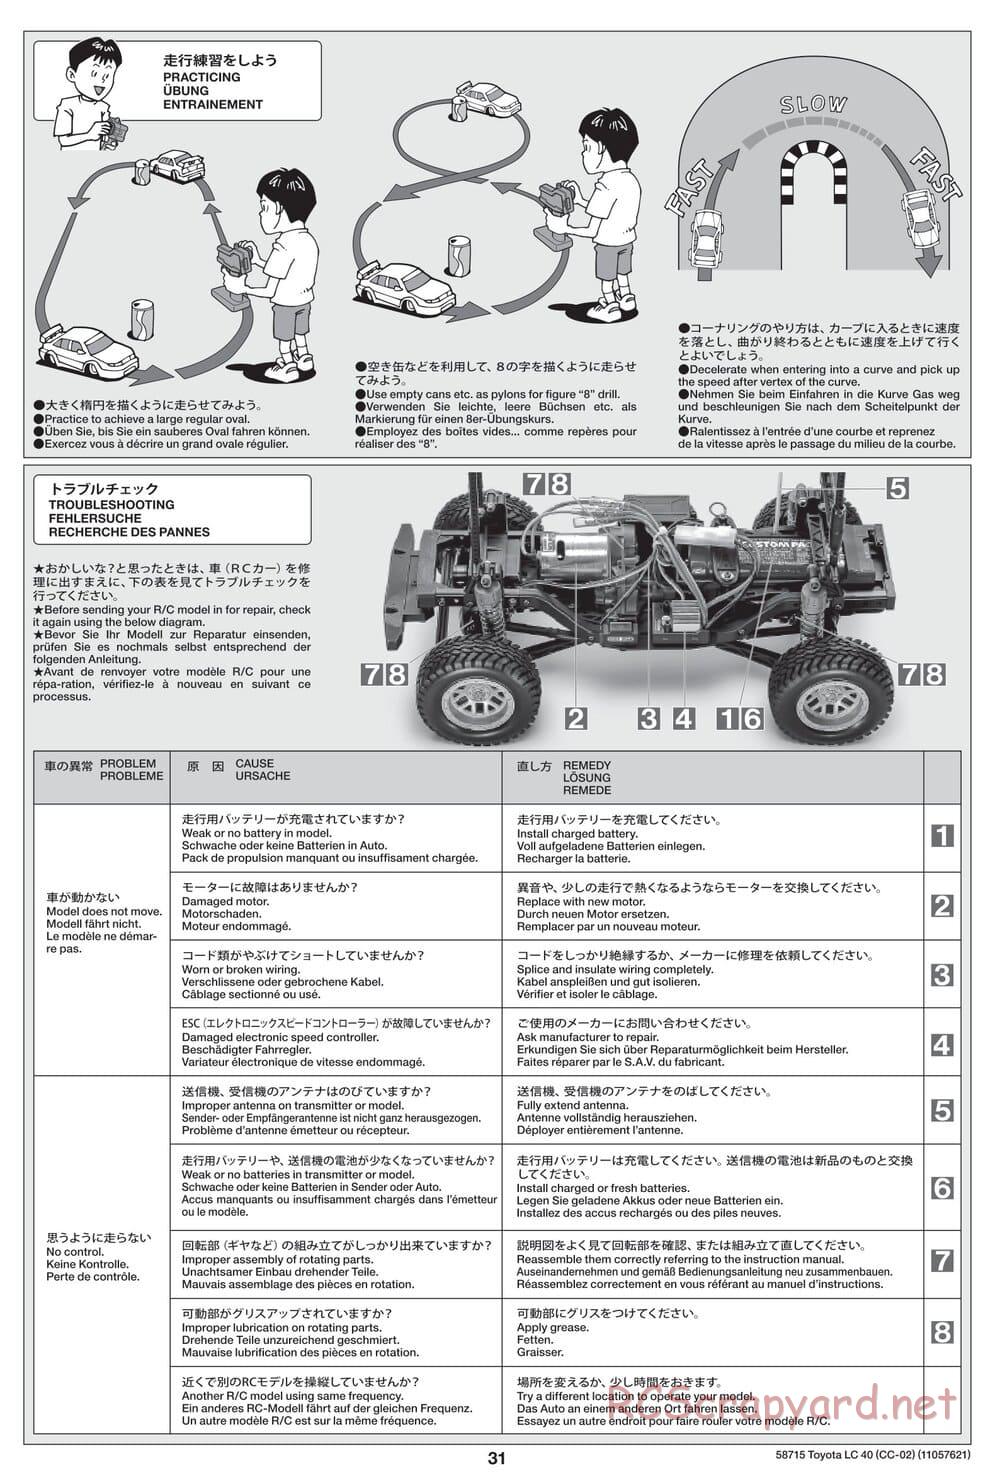 Tamiya - Toyota Land Cruiser 40 - CC-02 Chassis - Manual - Page 31